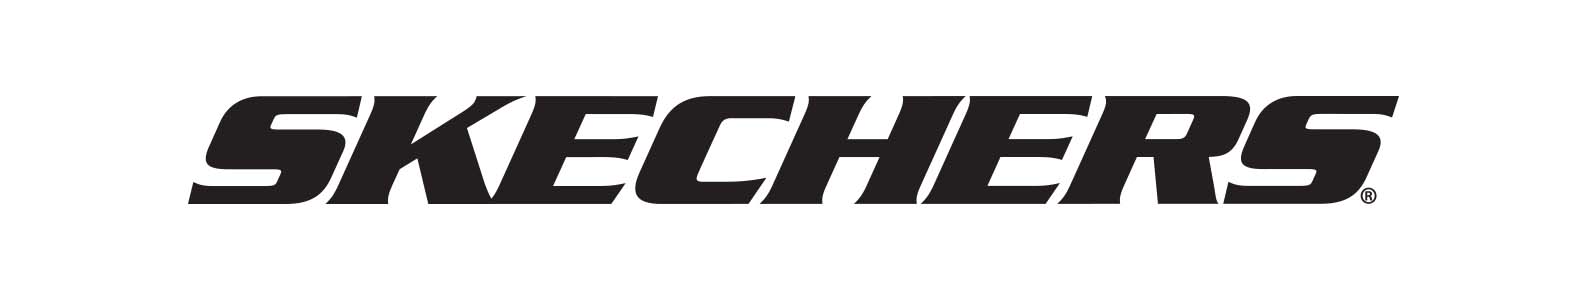 Skechers brand header image